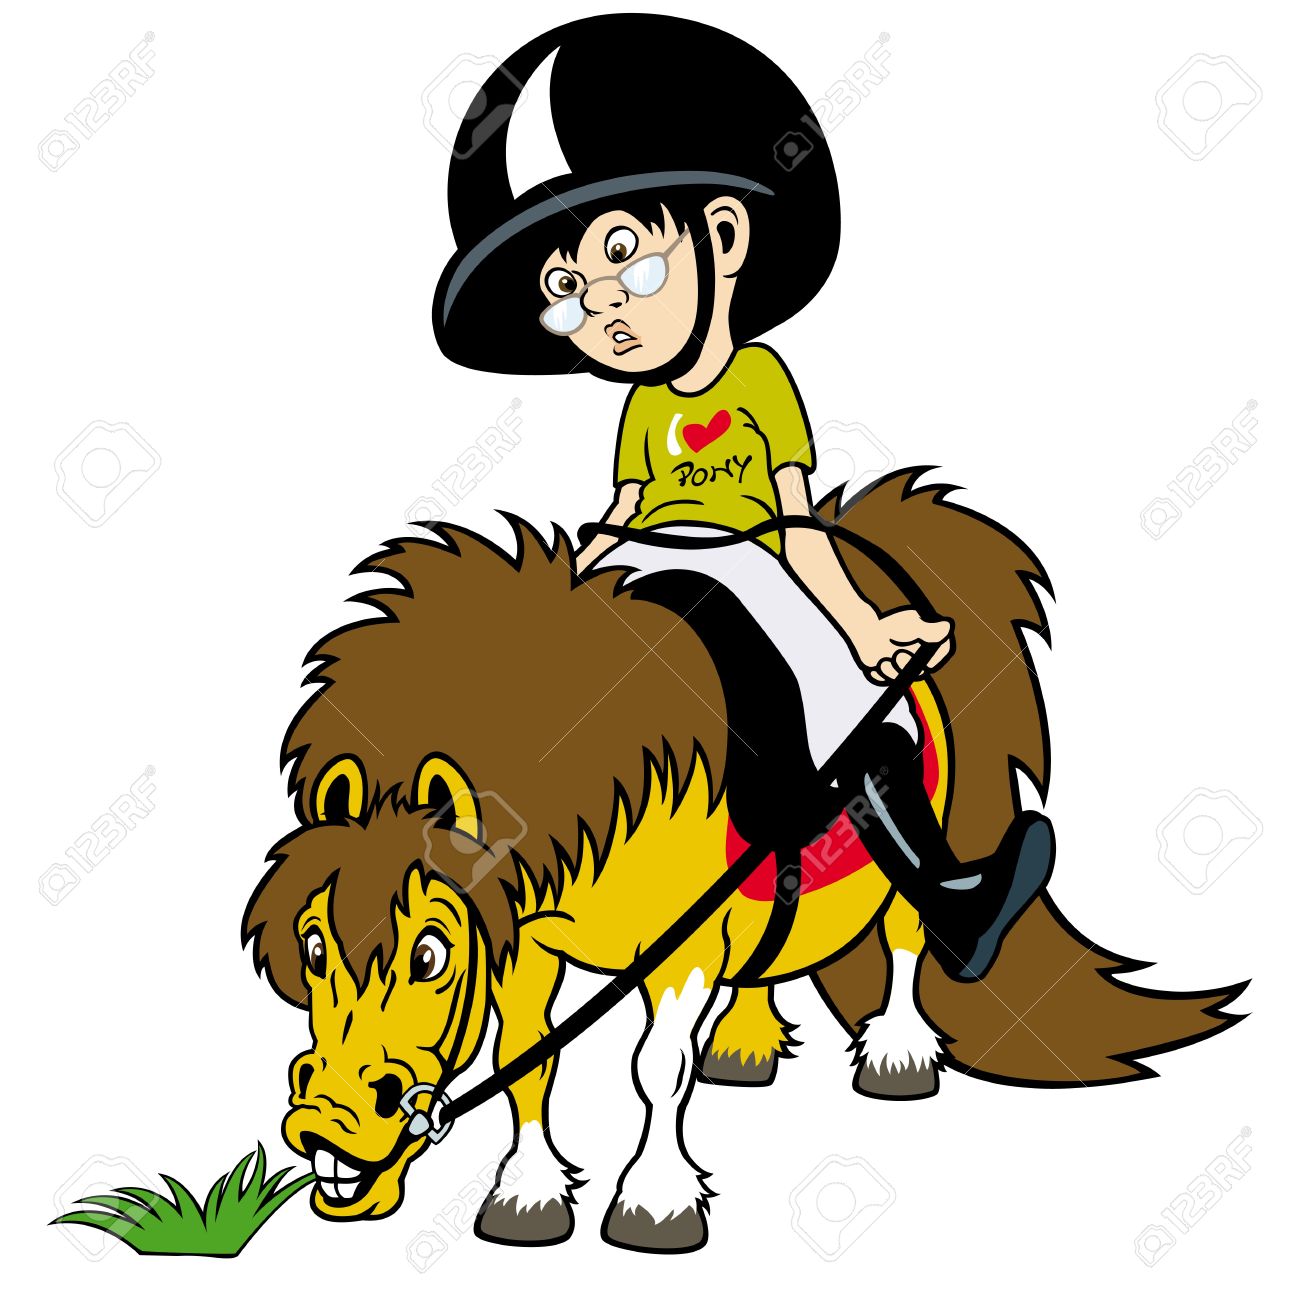 17624413-horse-rider-little-boy-riding-equestrian-sport-children-illustration-Stock-Vector